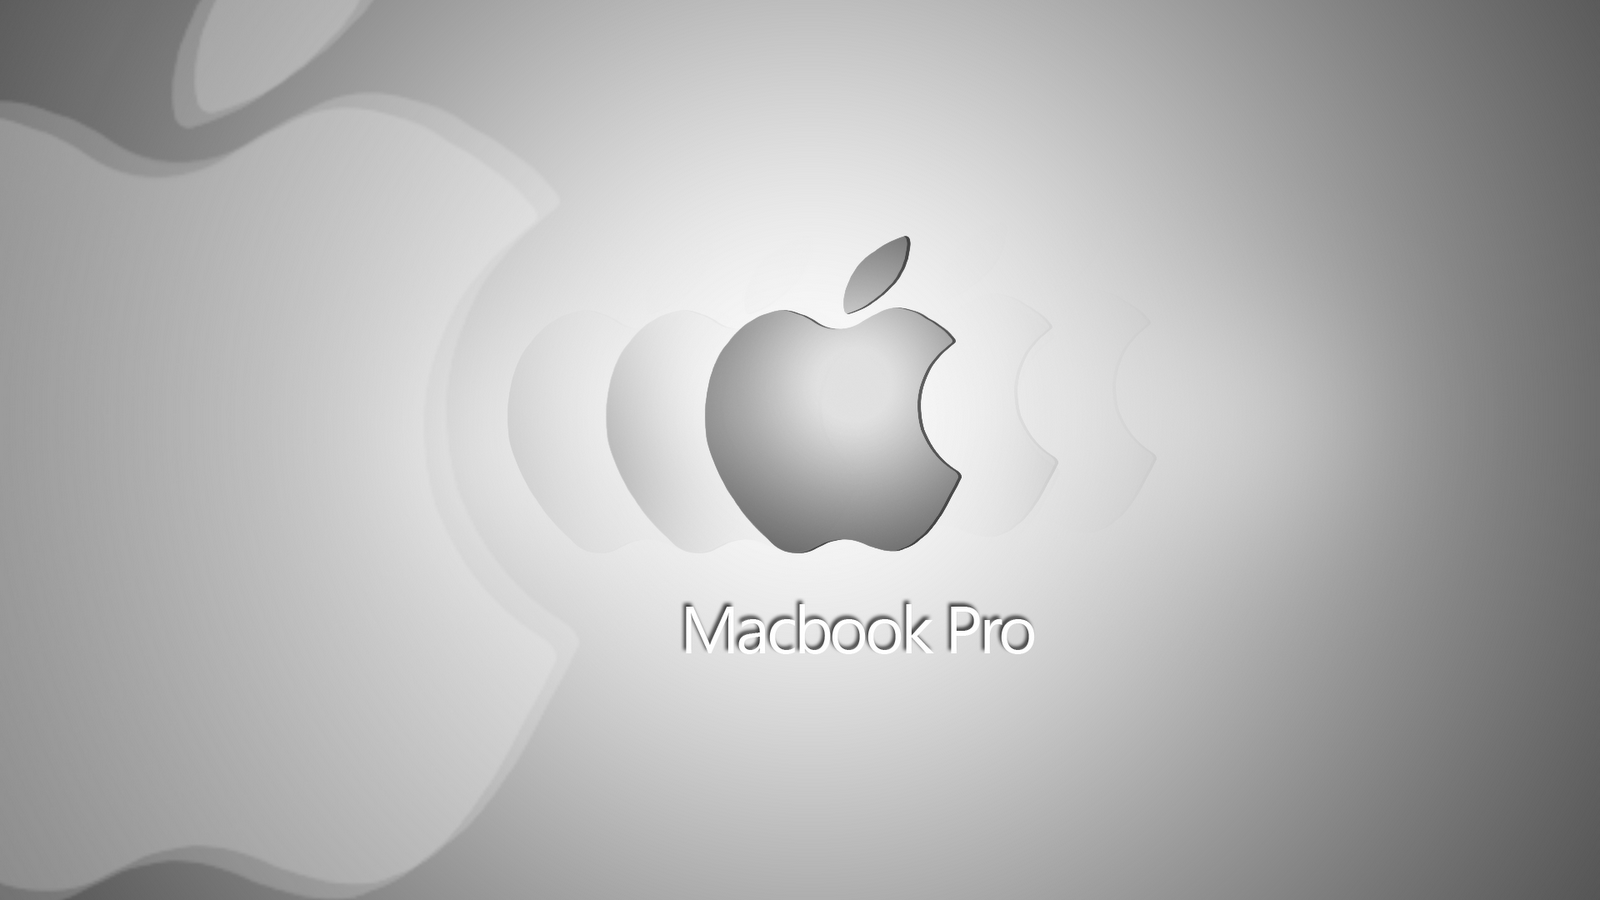 Gallery for - apple logo wallpaper for macbook